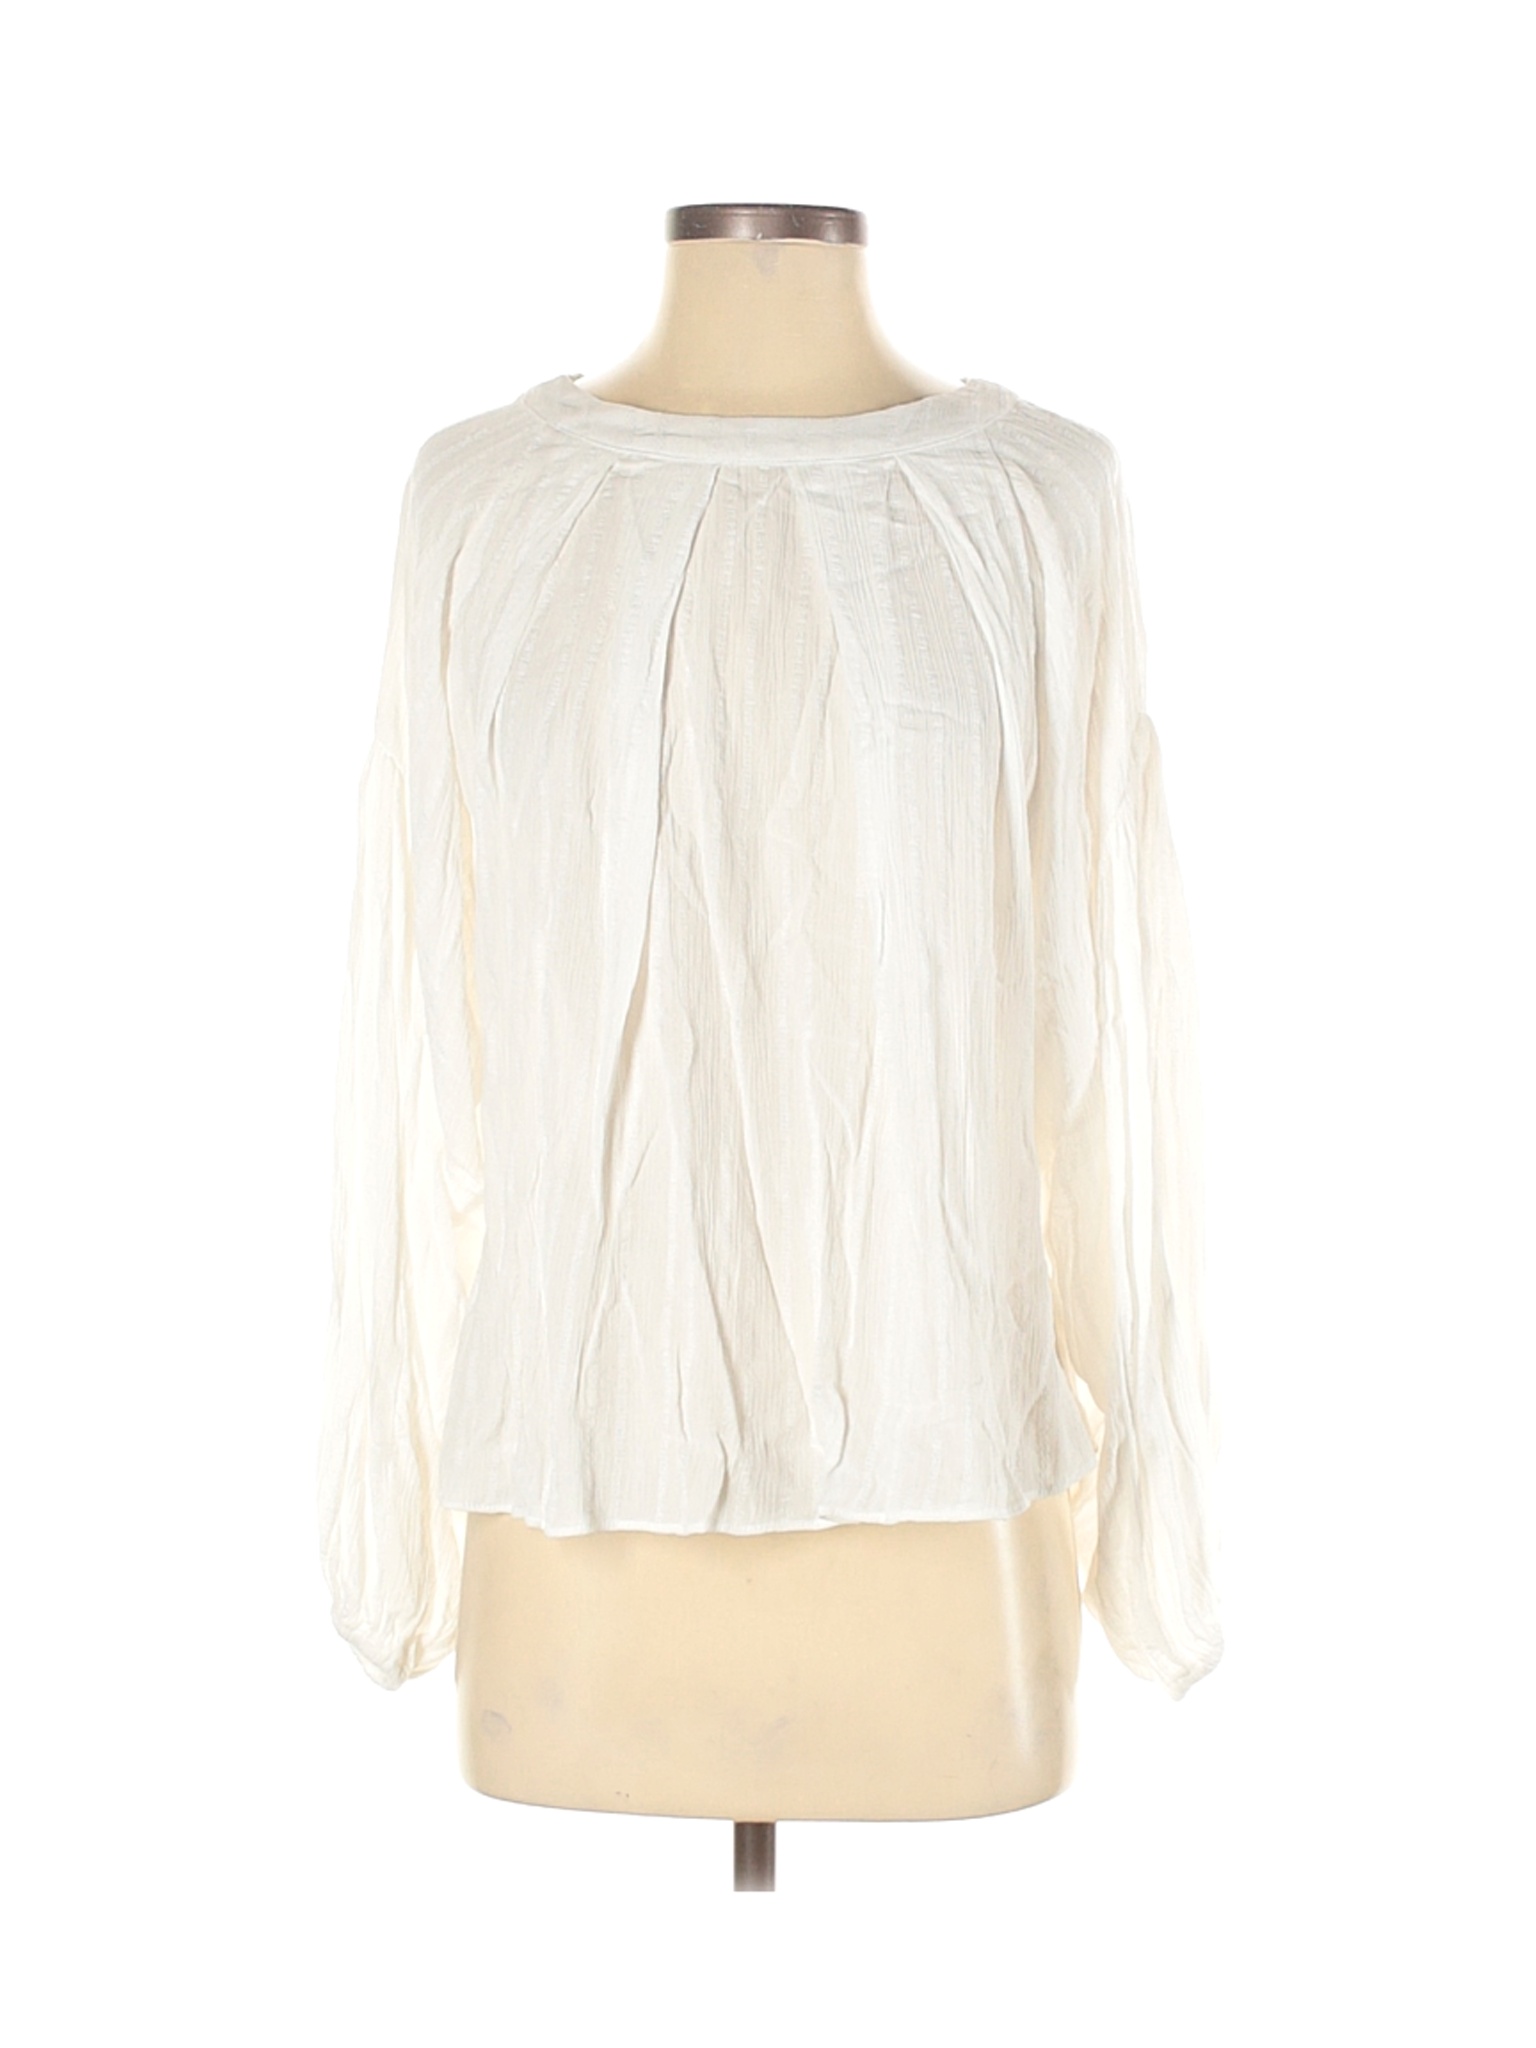 NWT Universal Thread Women Ivory Long Sleeve Blouse XS | eBay